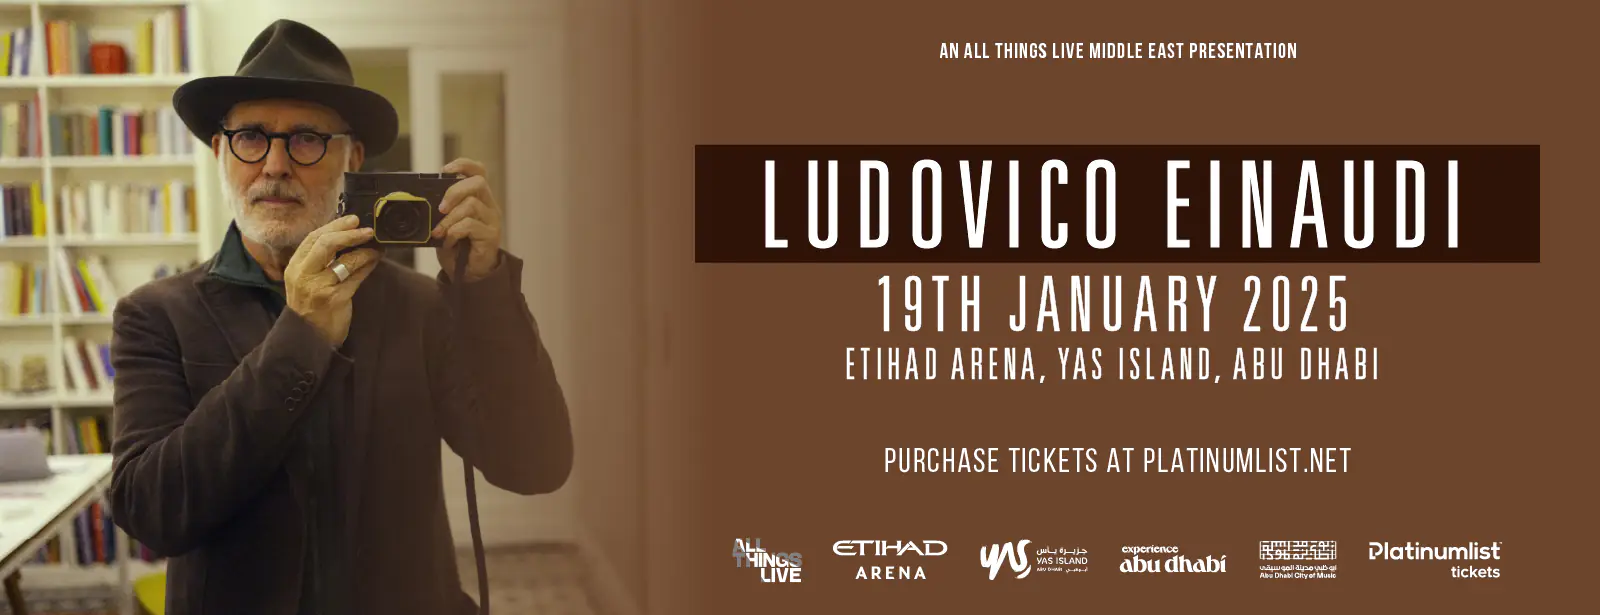 Ludovico Einaudi 2025 Live in Abu Dhabi - Coming Soon in UAE